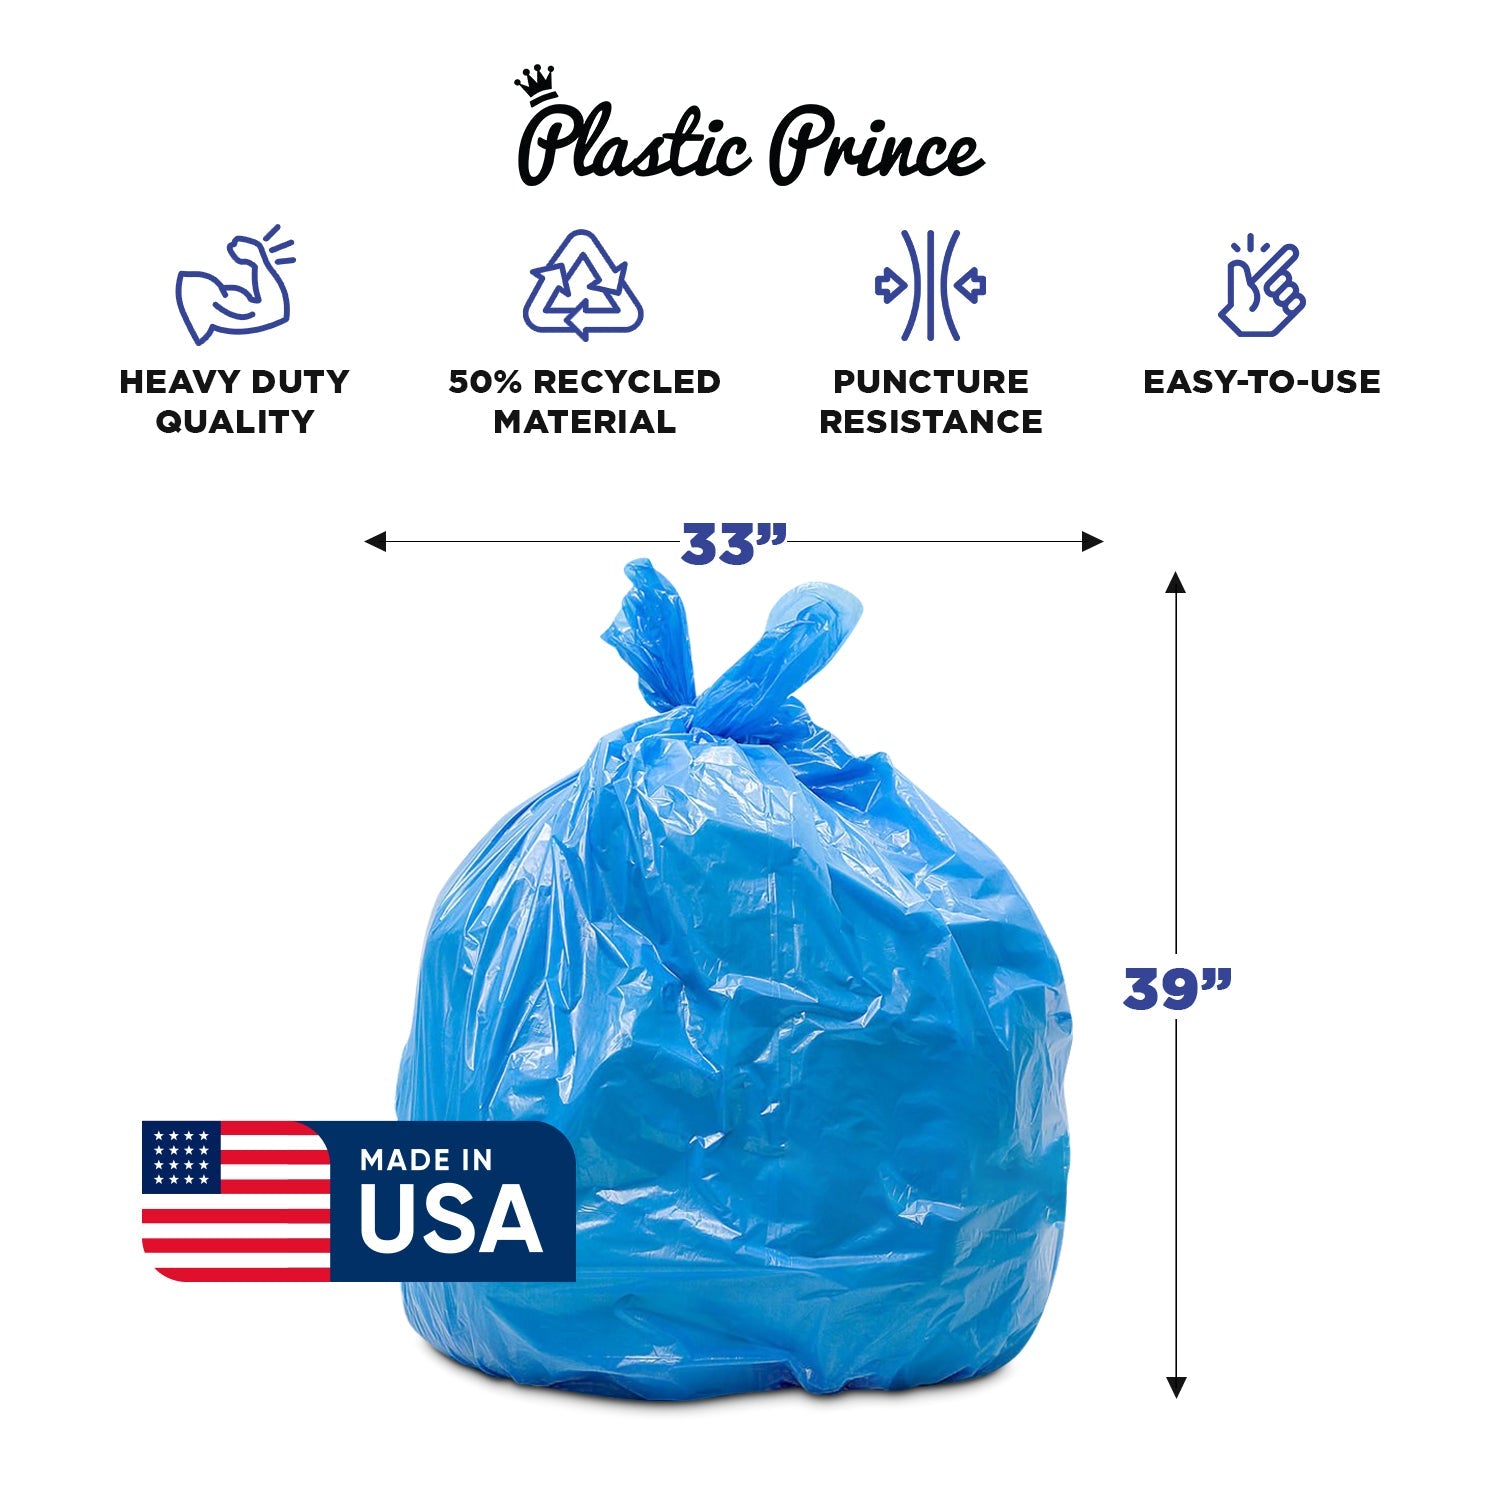 23" x 10" x 39" 33 Gal 1.5 Mil Blue Recycling Bags, 100/Case